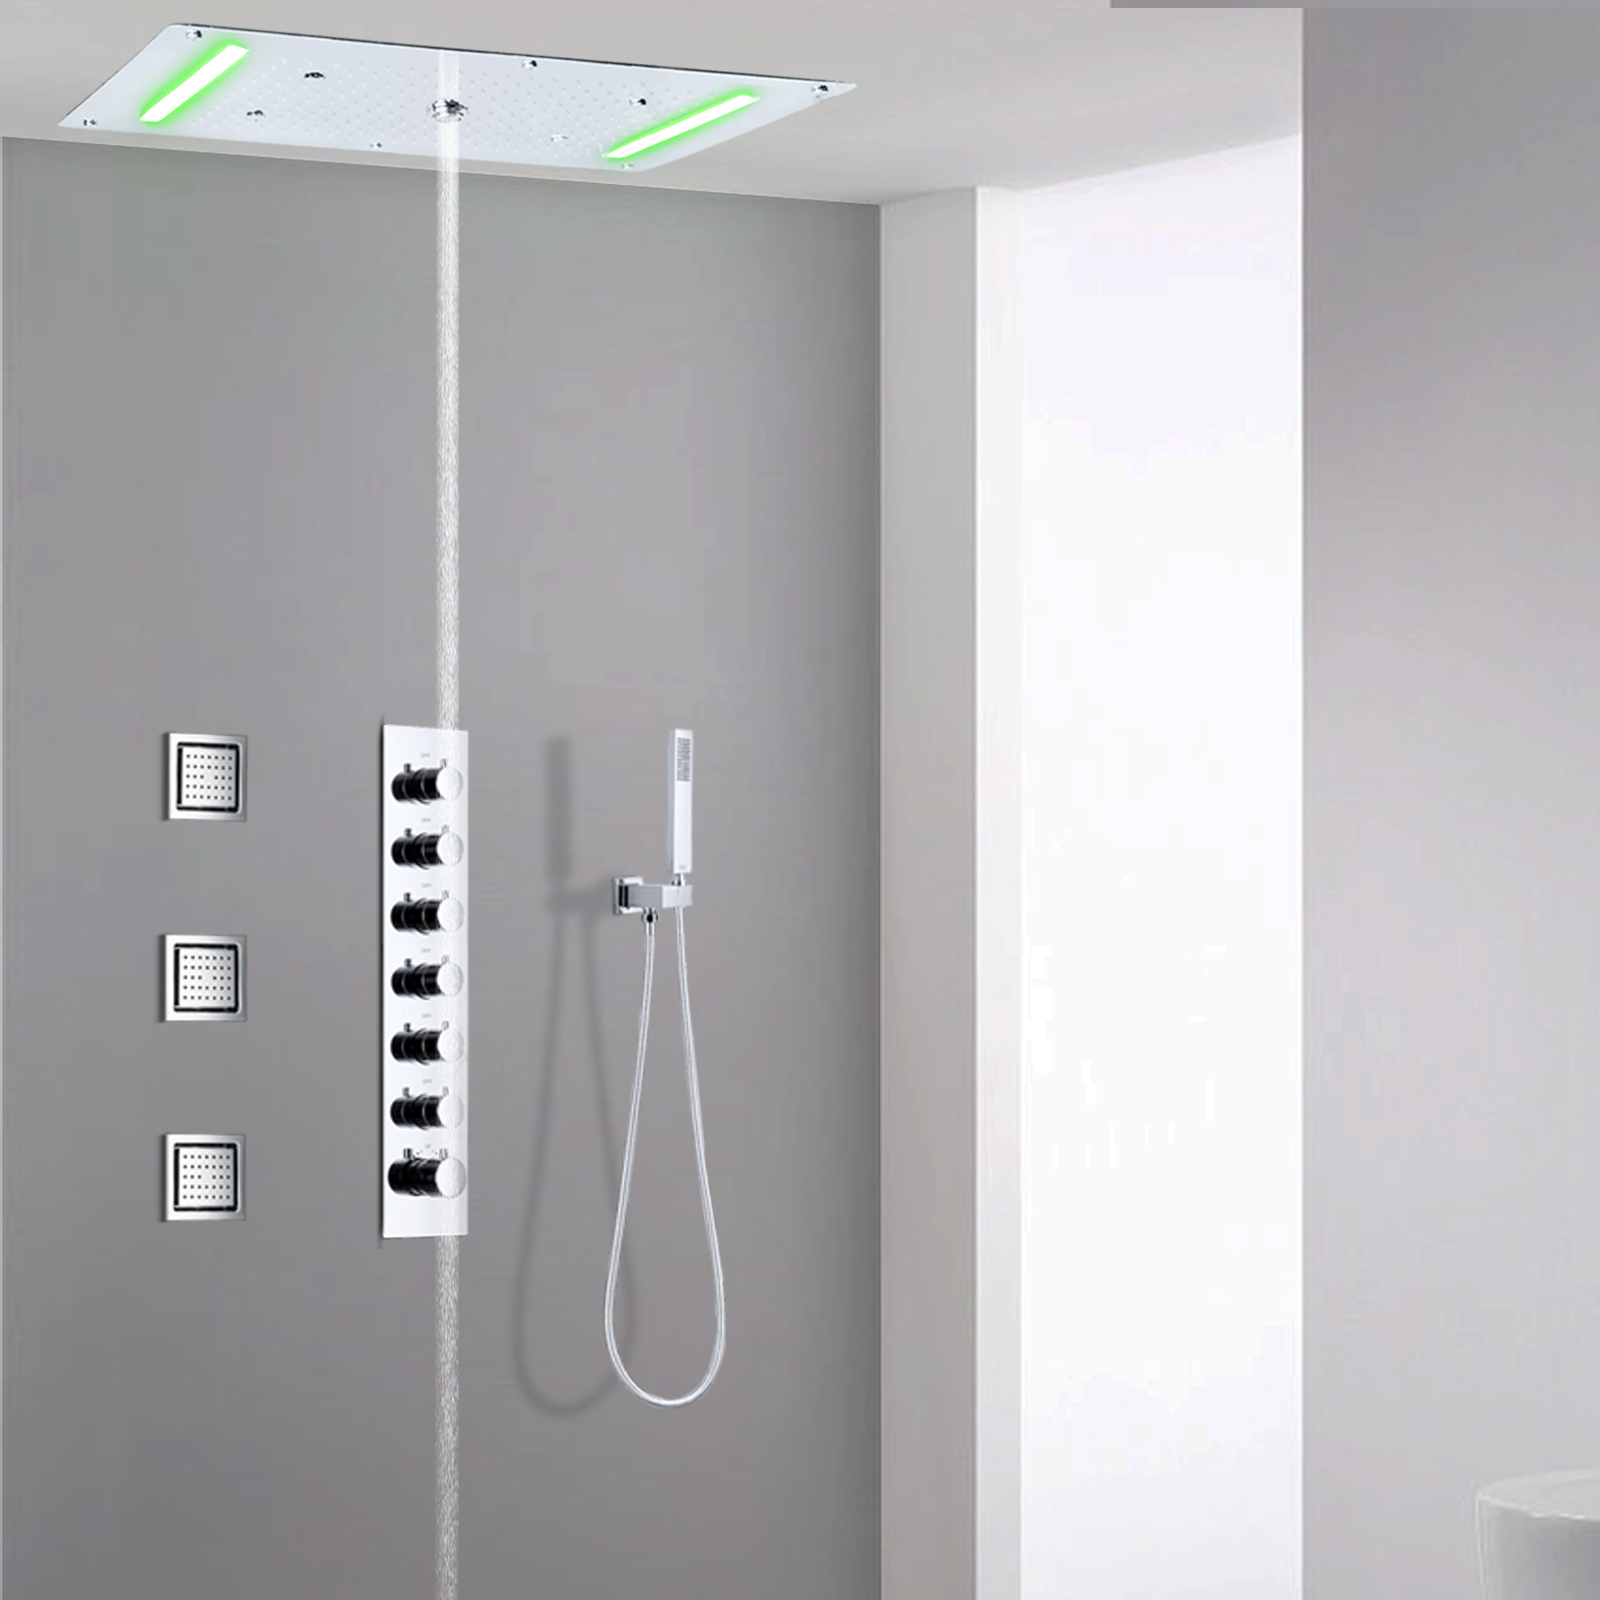 LED chrome-plated waterfall shower rain shower system bathroom hidden shower column misting faucet set